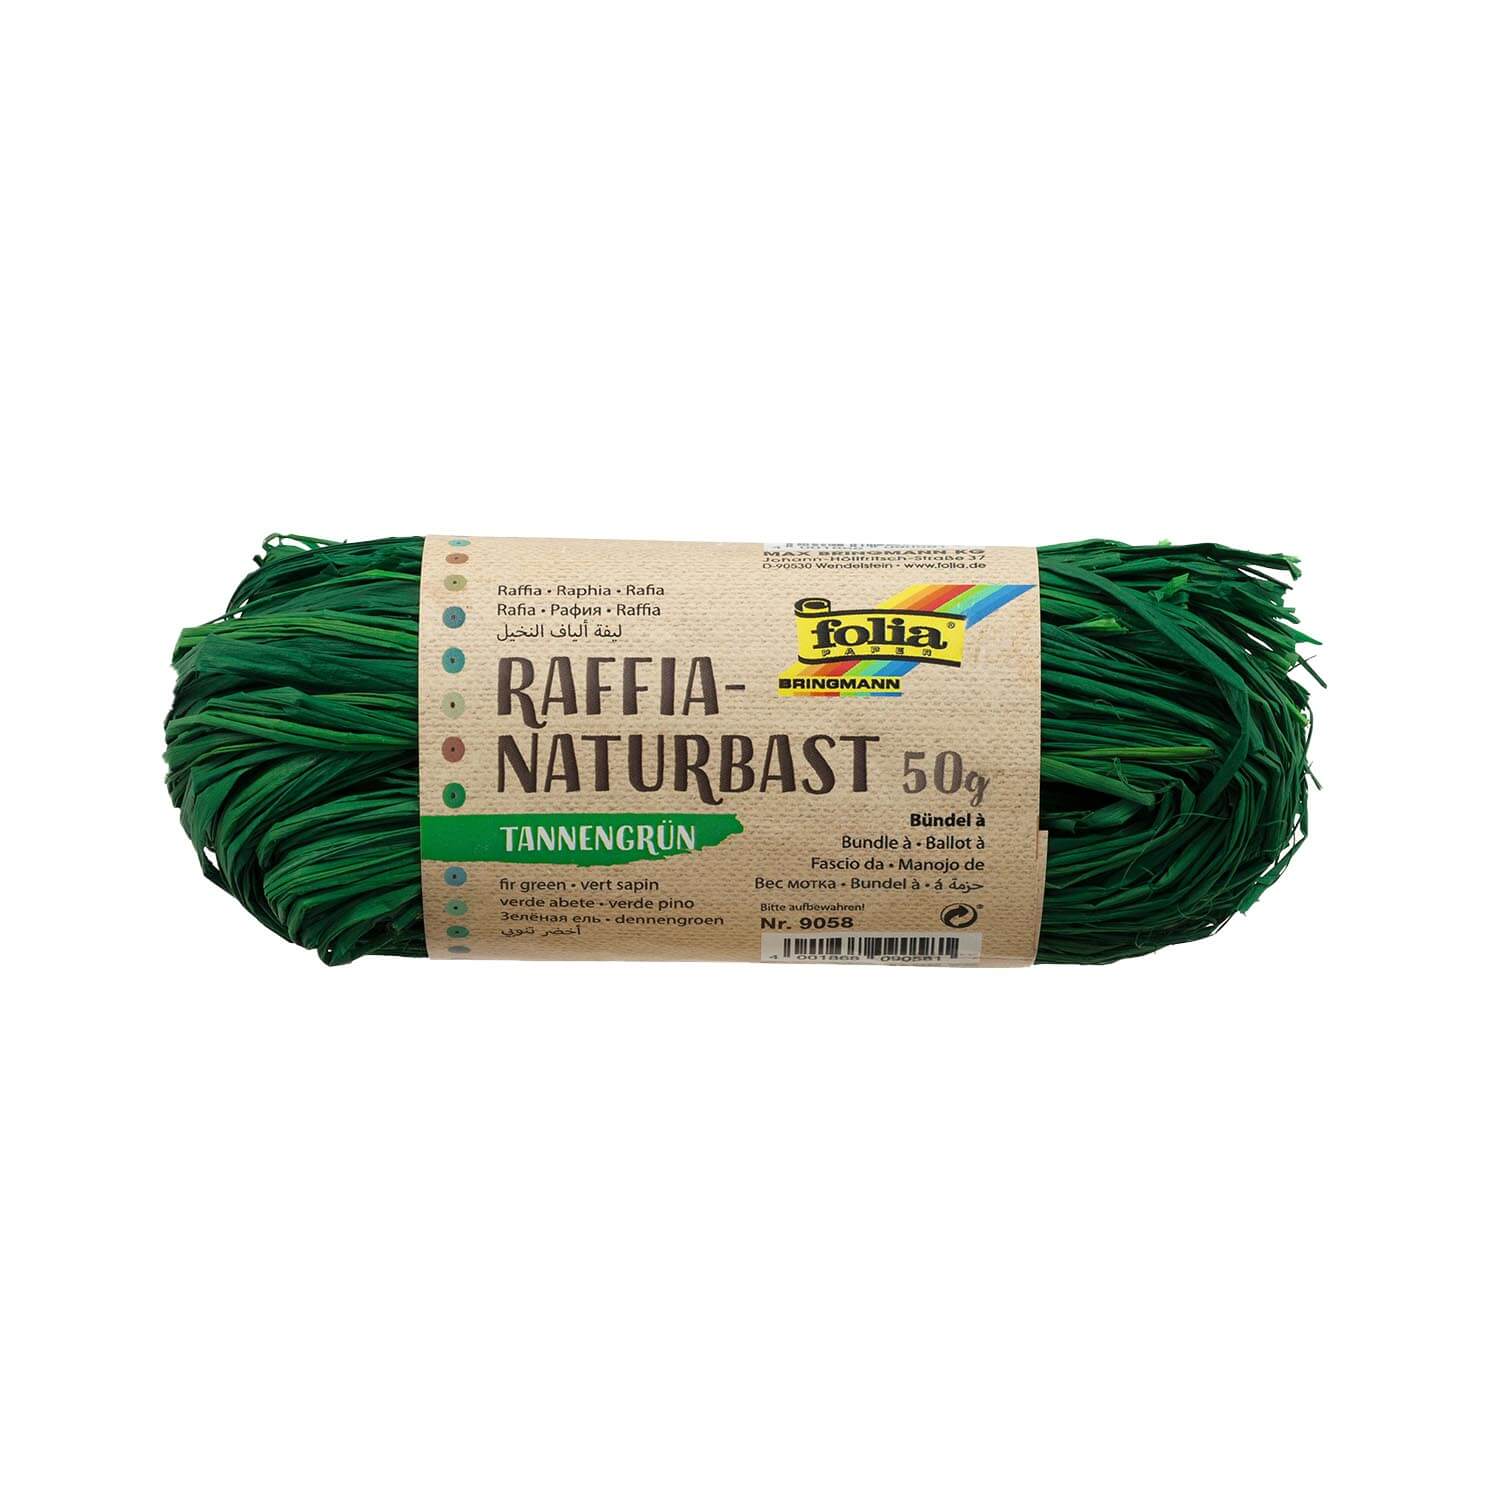 Raffia-Naturbast "Natur", tannengrün